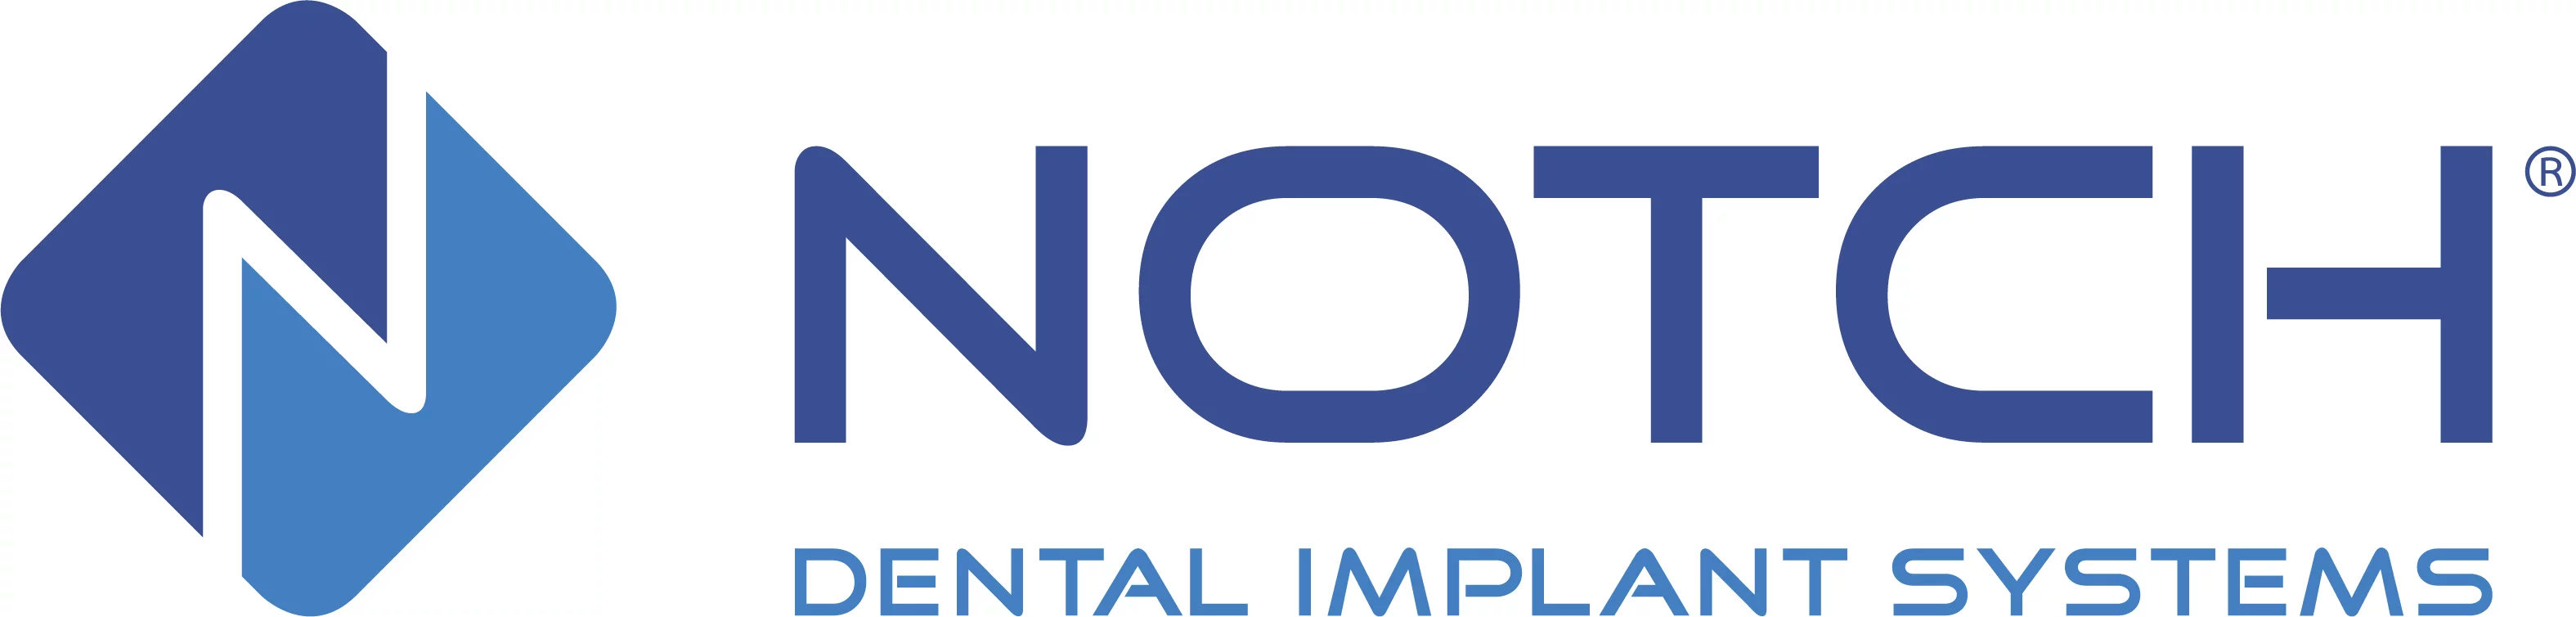 Notch® Implant GmbH